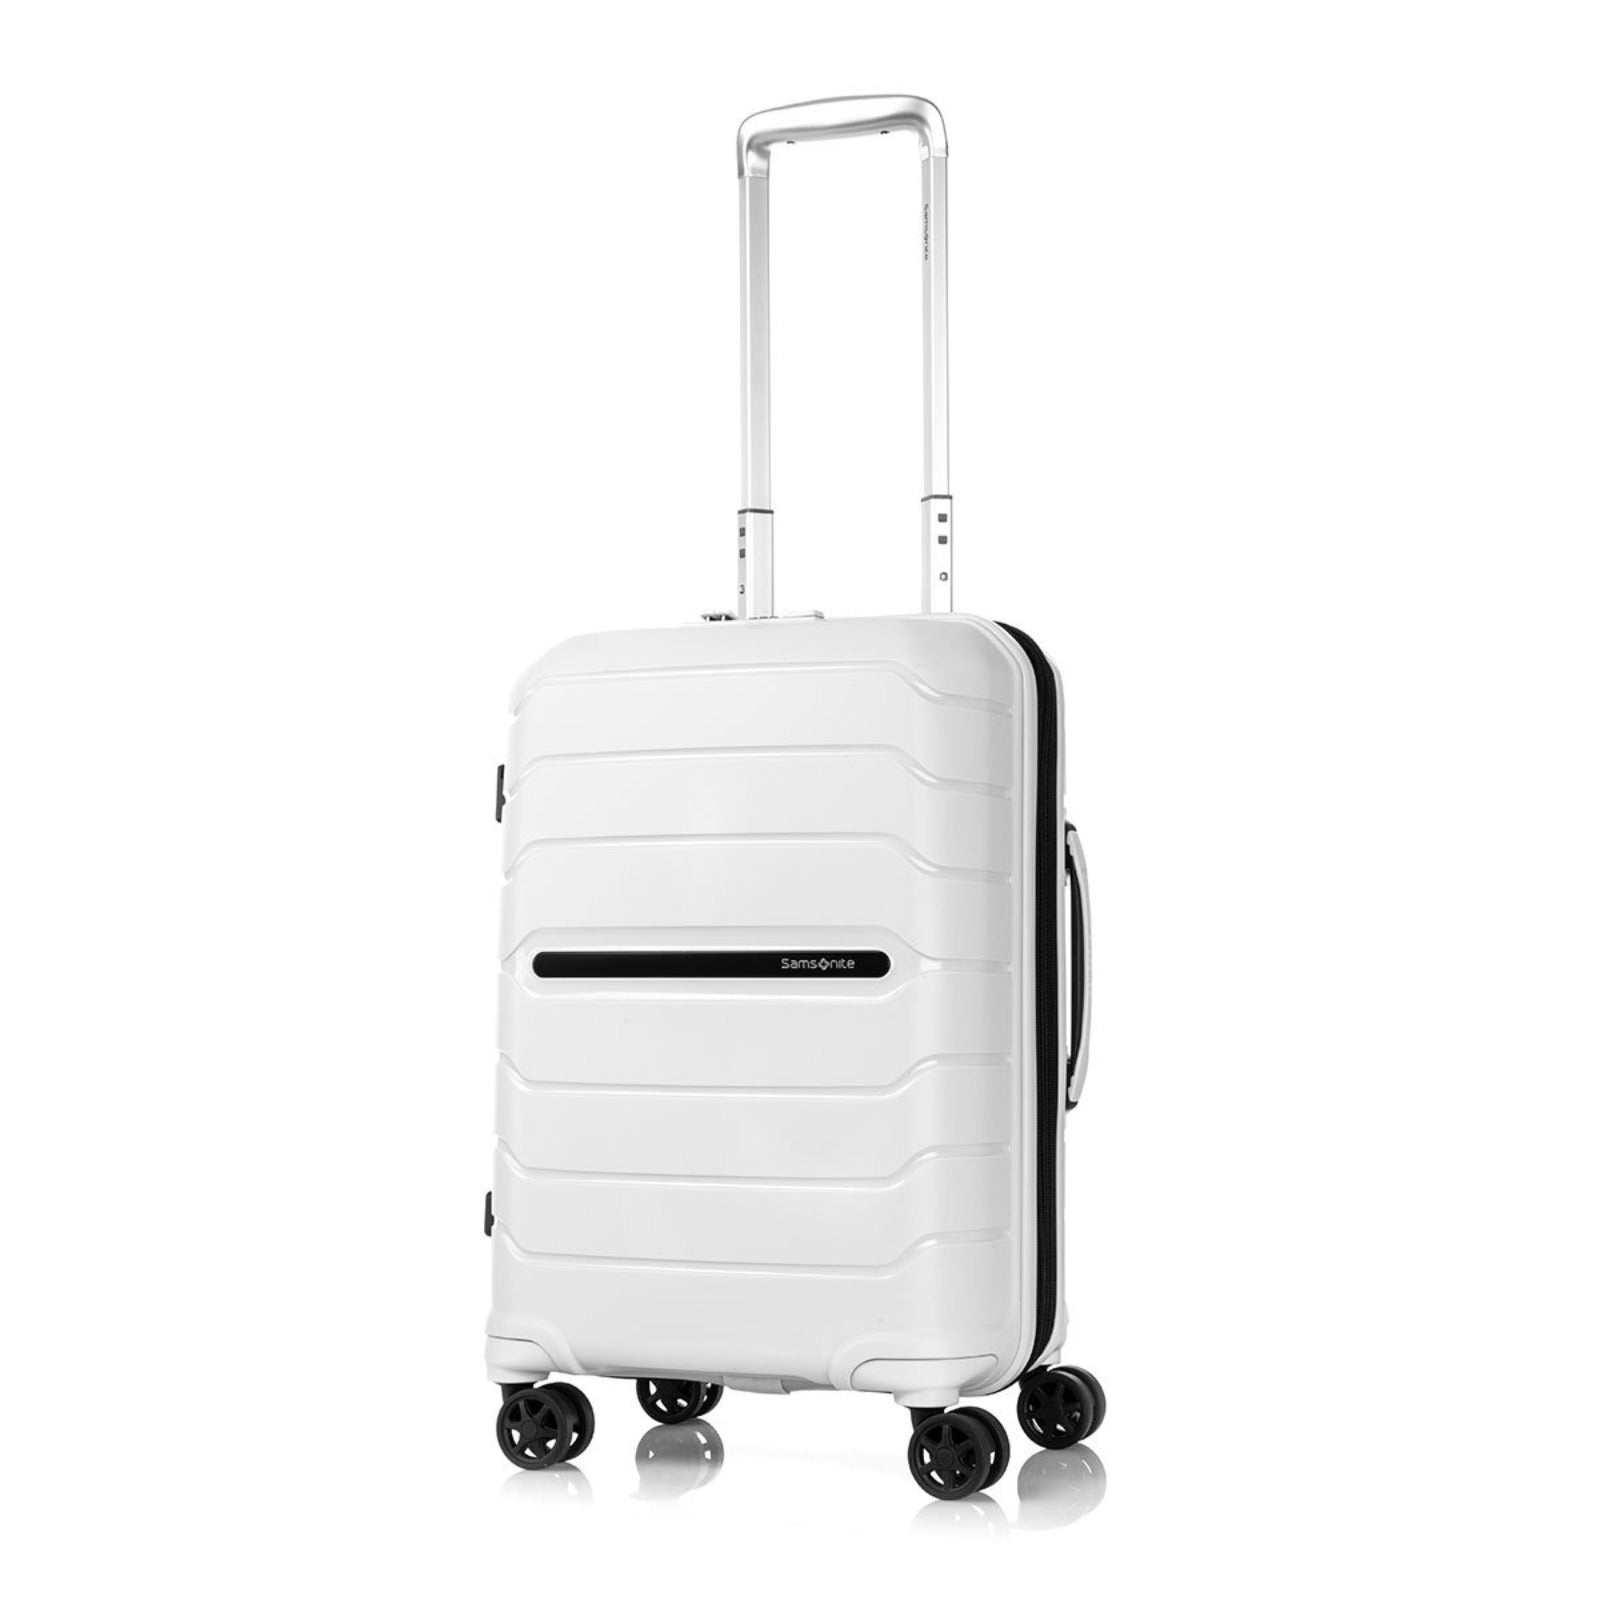 Samsonite_Oc2lite_55cm_Carry-On_Suitcase_Off_White_Front